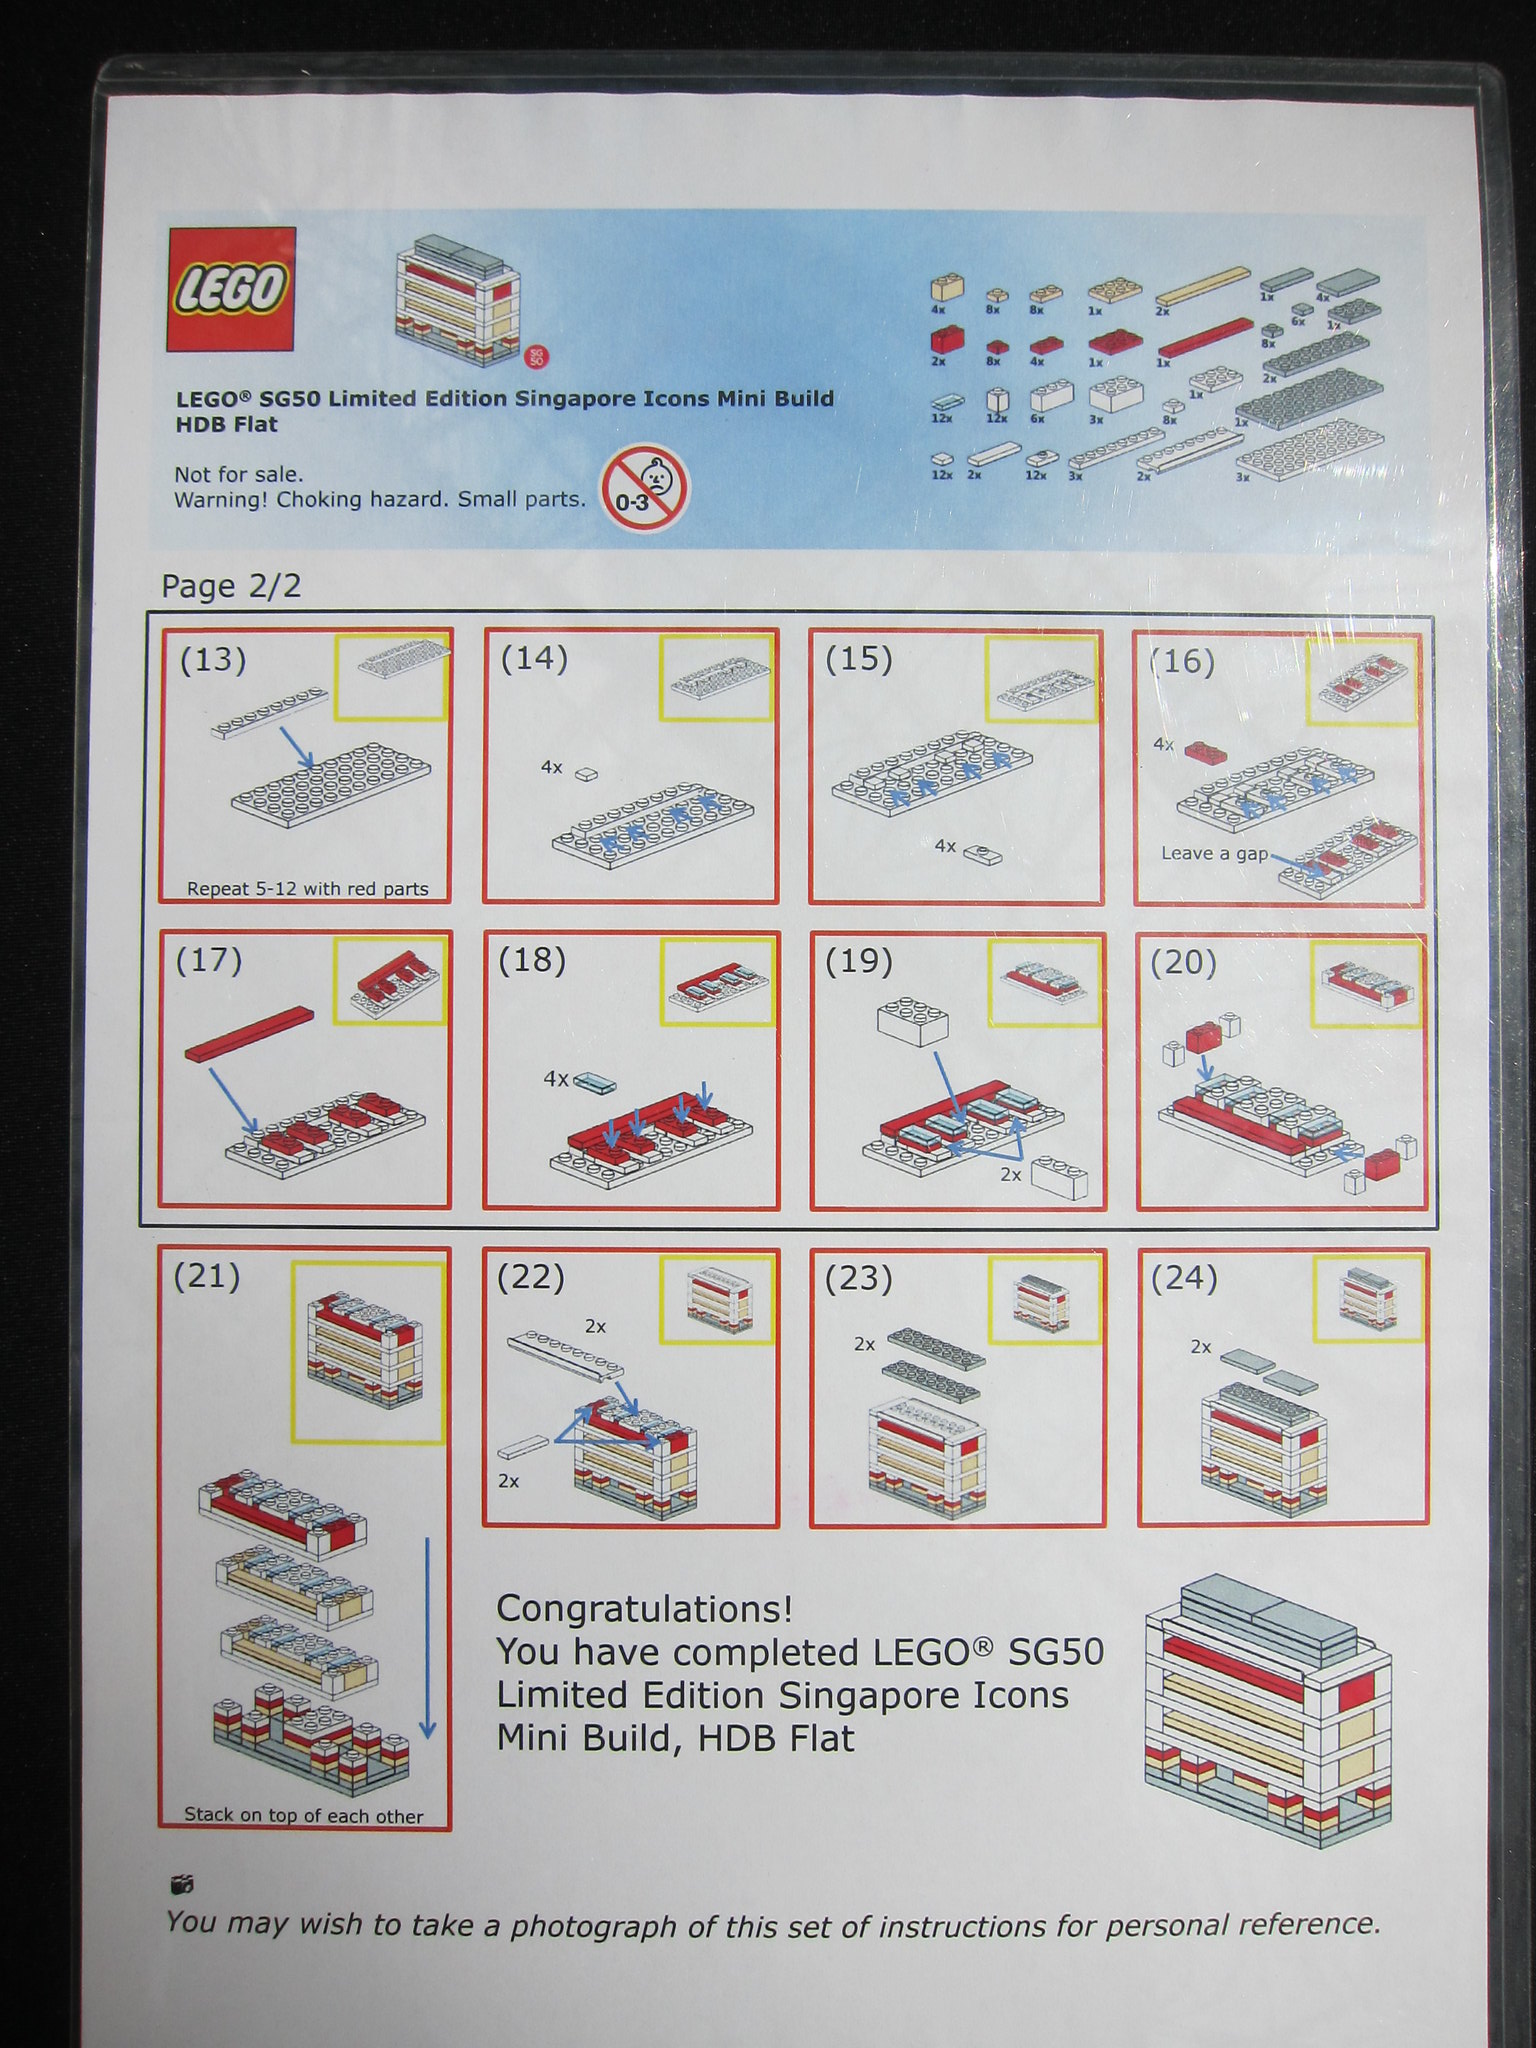 Lego Schematics, Lego Sg50 Limited Edition Singapore Icons Mini Build Hdb Flat Instructions 2 Of, Lego Schematics